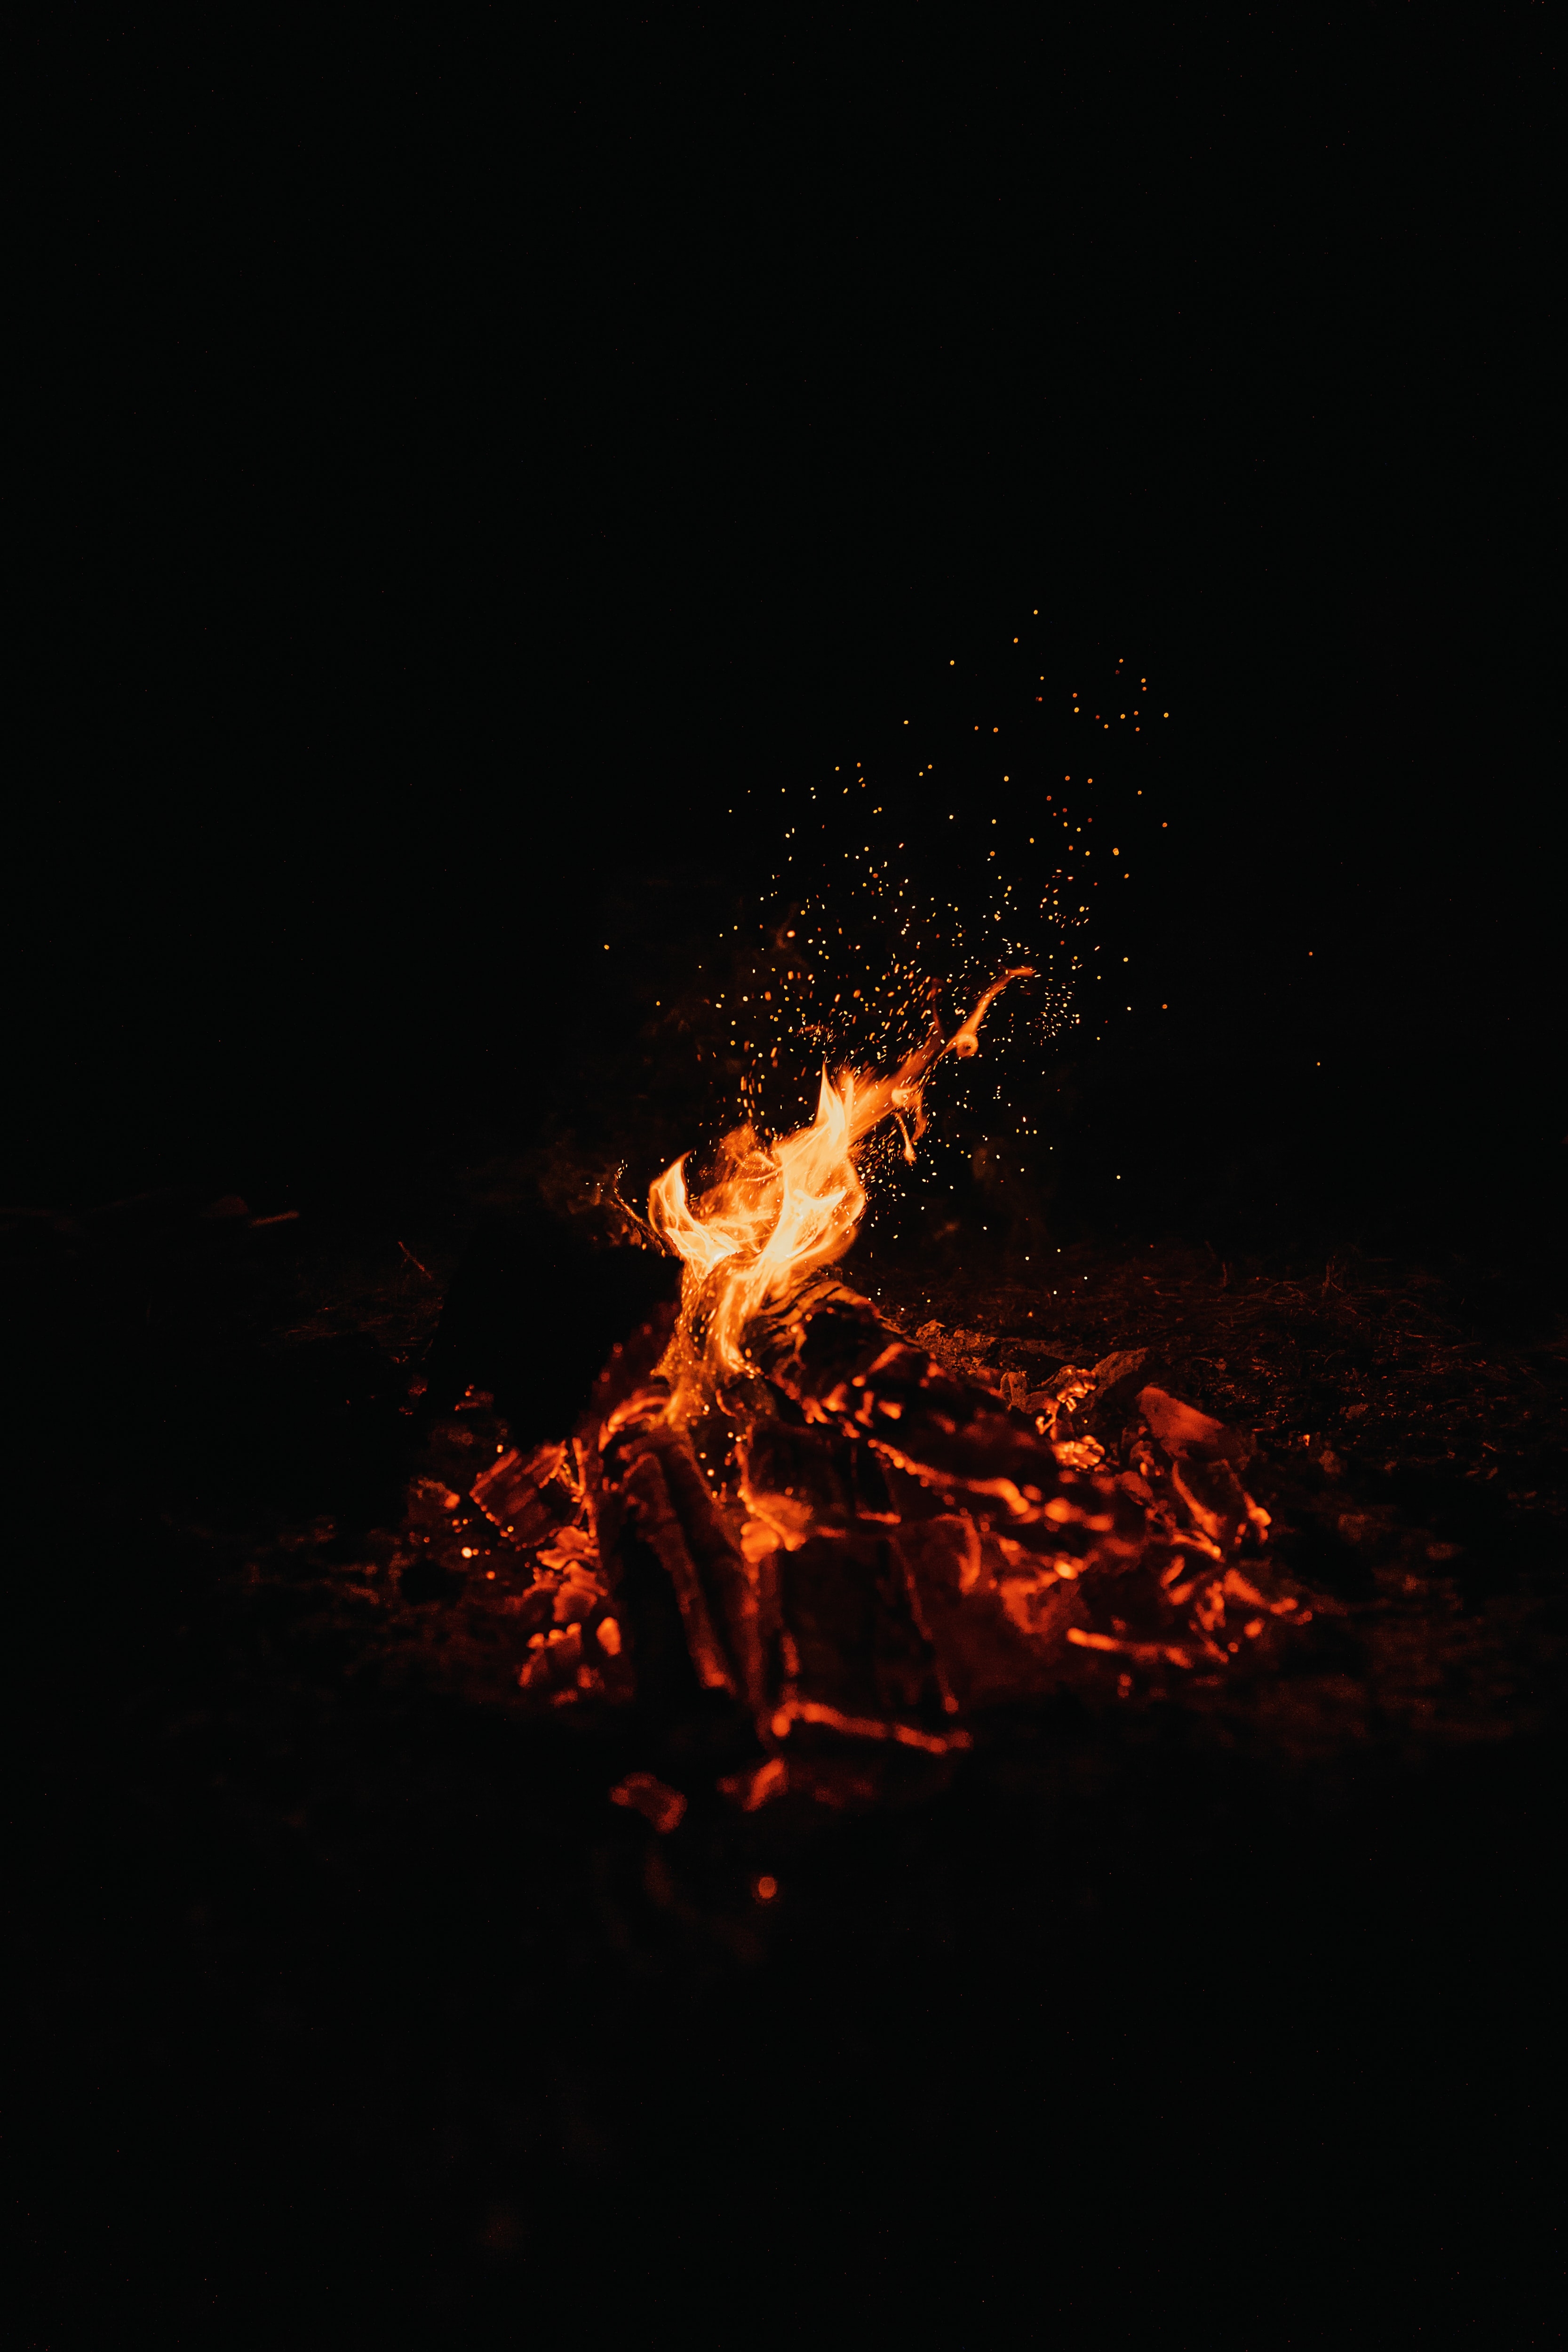 HD wallpaper, Burning, Dark, 5K, Black Background, Bonfire, Outdoor, Night Time, Campfire, Flame